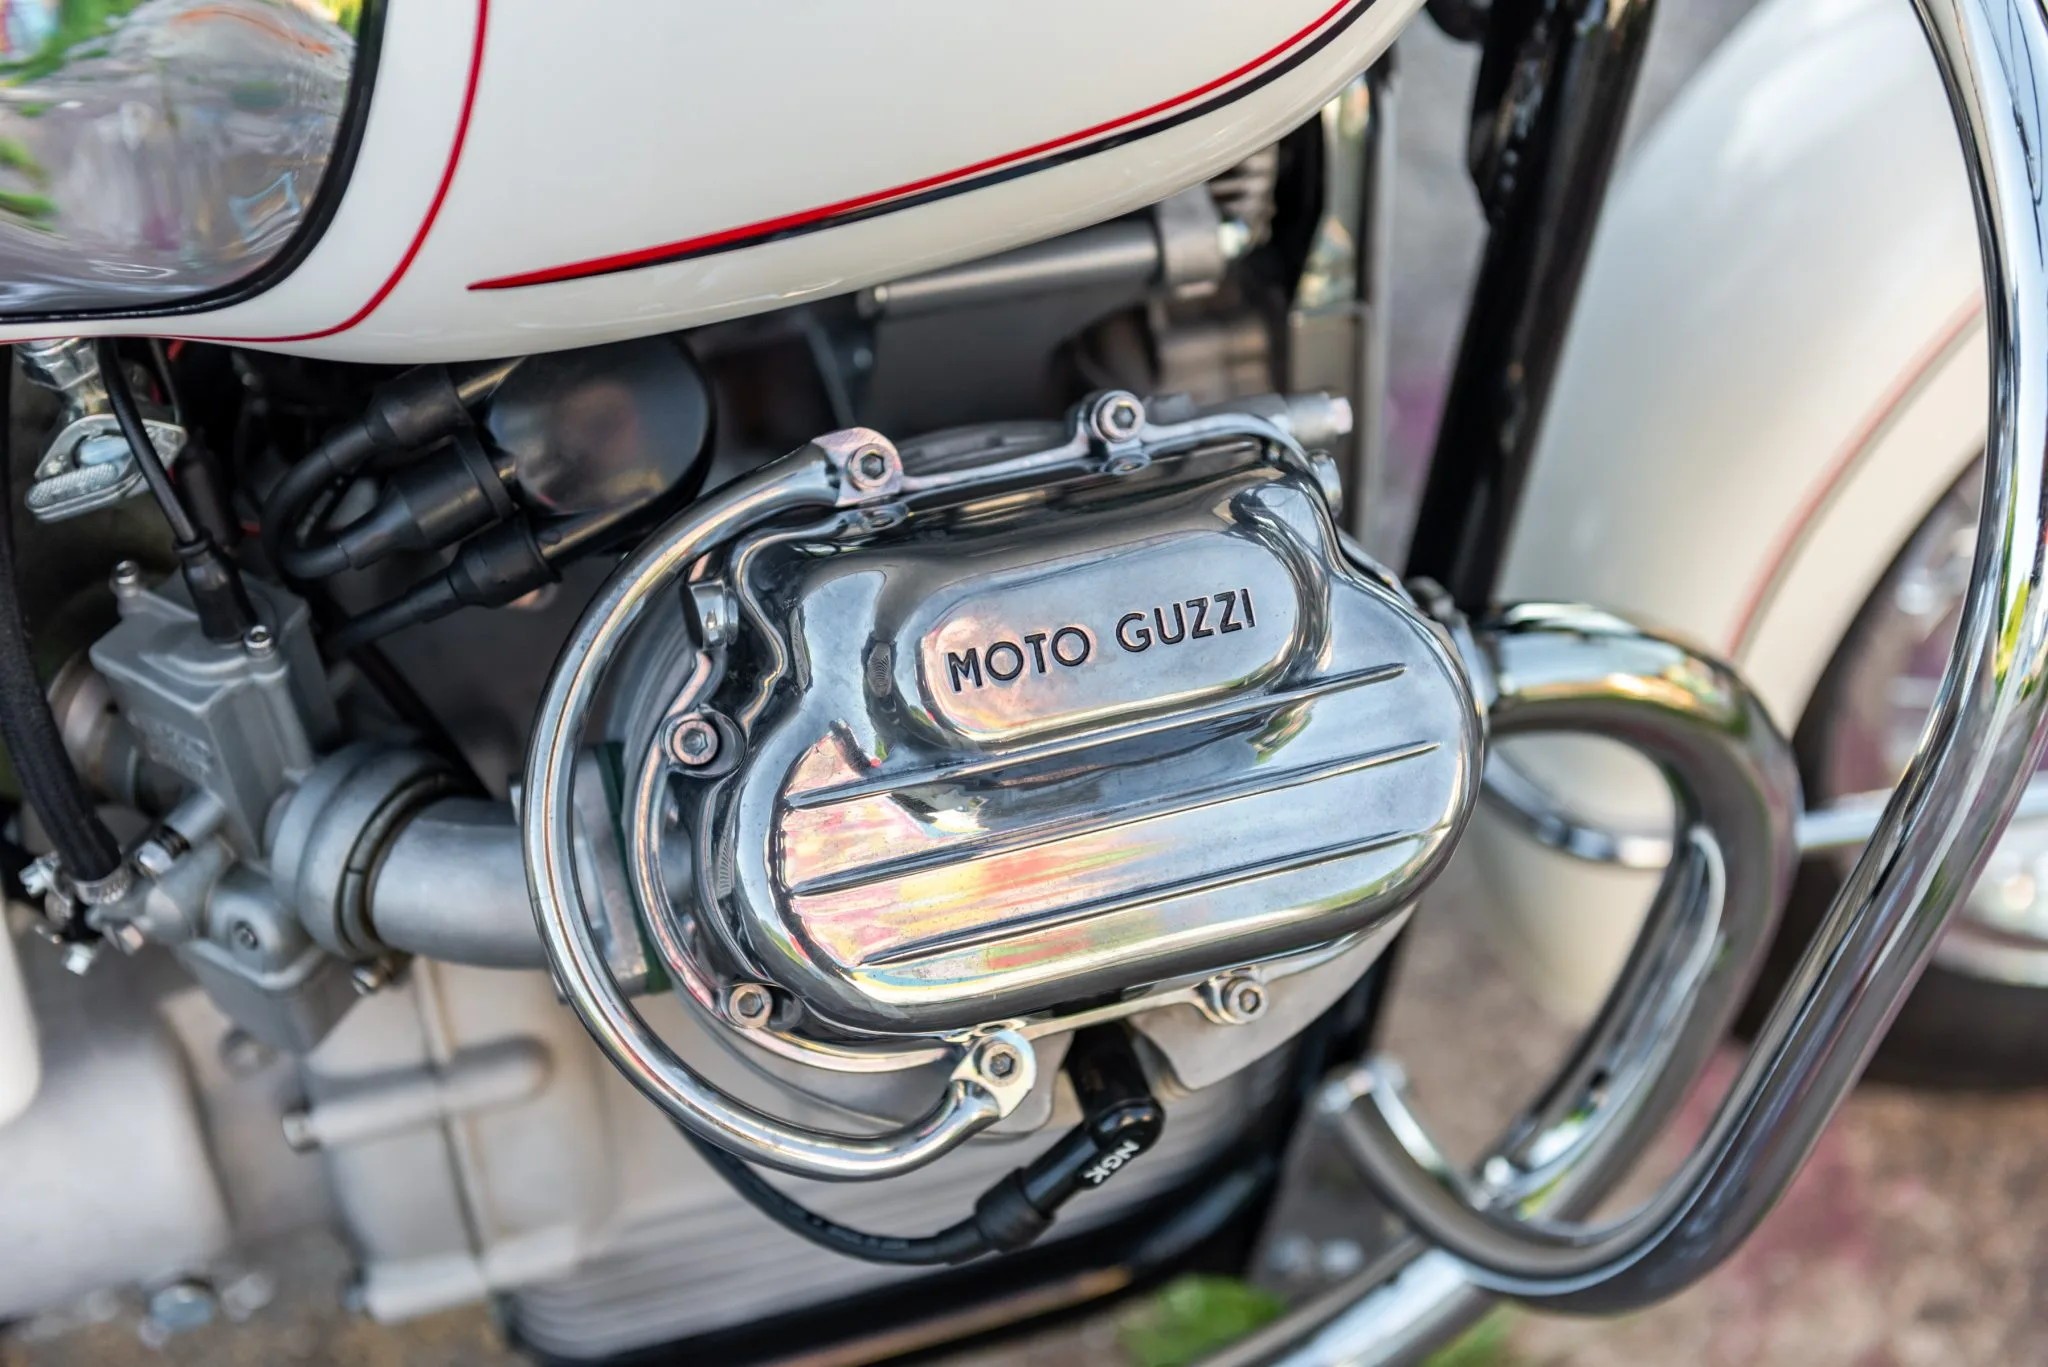 Restored 1970 Moto Guzzi Ambassador Is Teeming With Museum-Grade ...